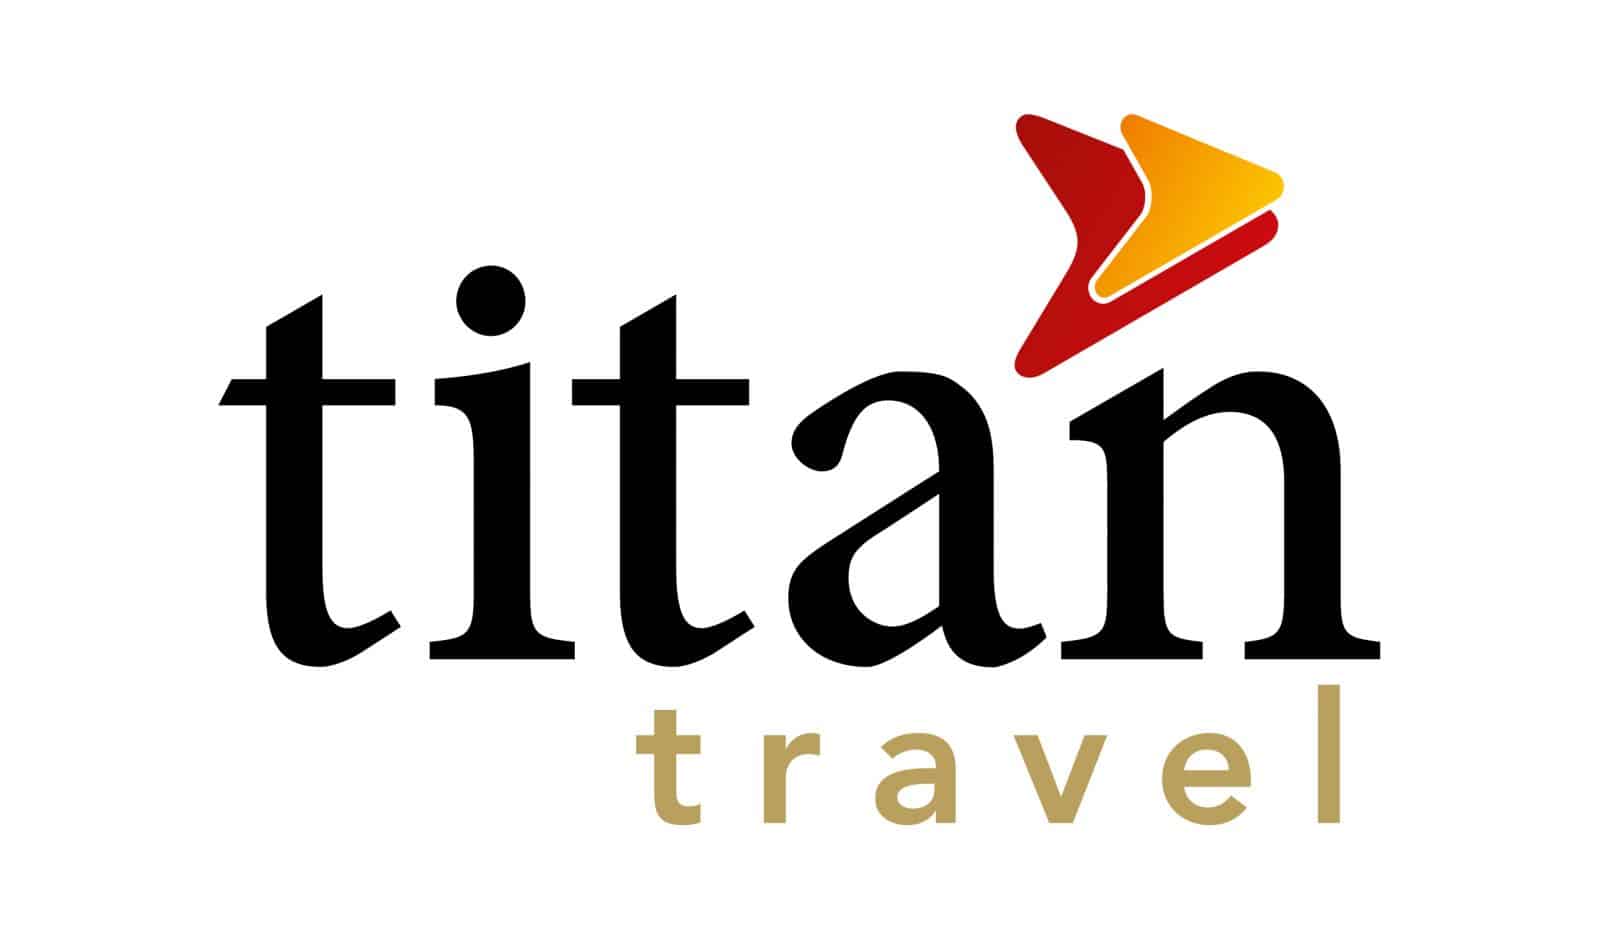 titan travel holiday insurance